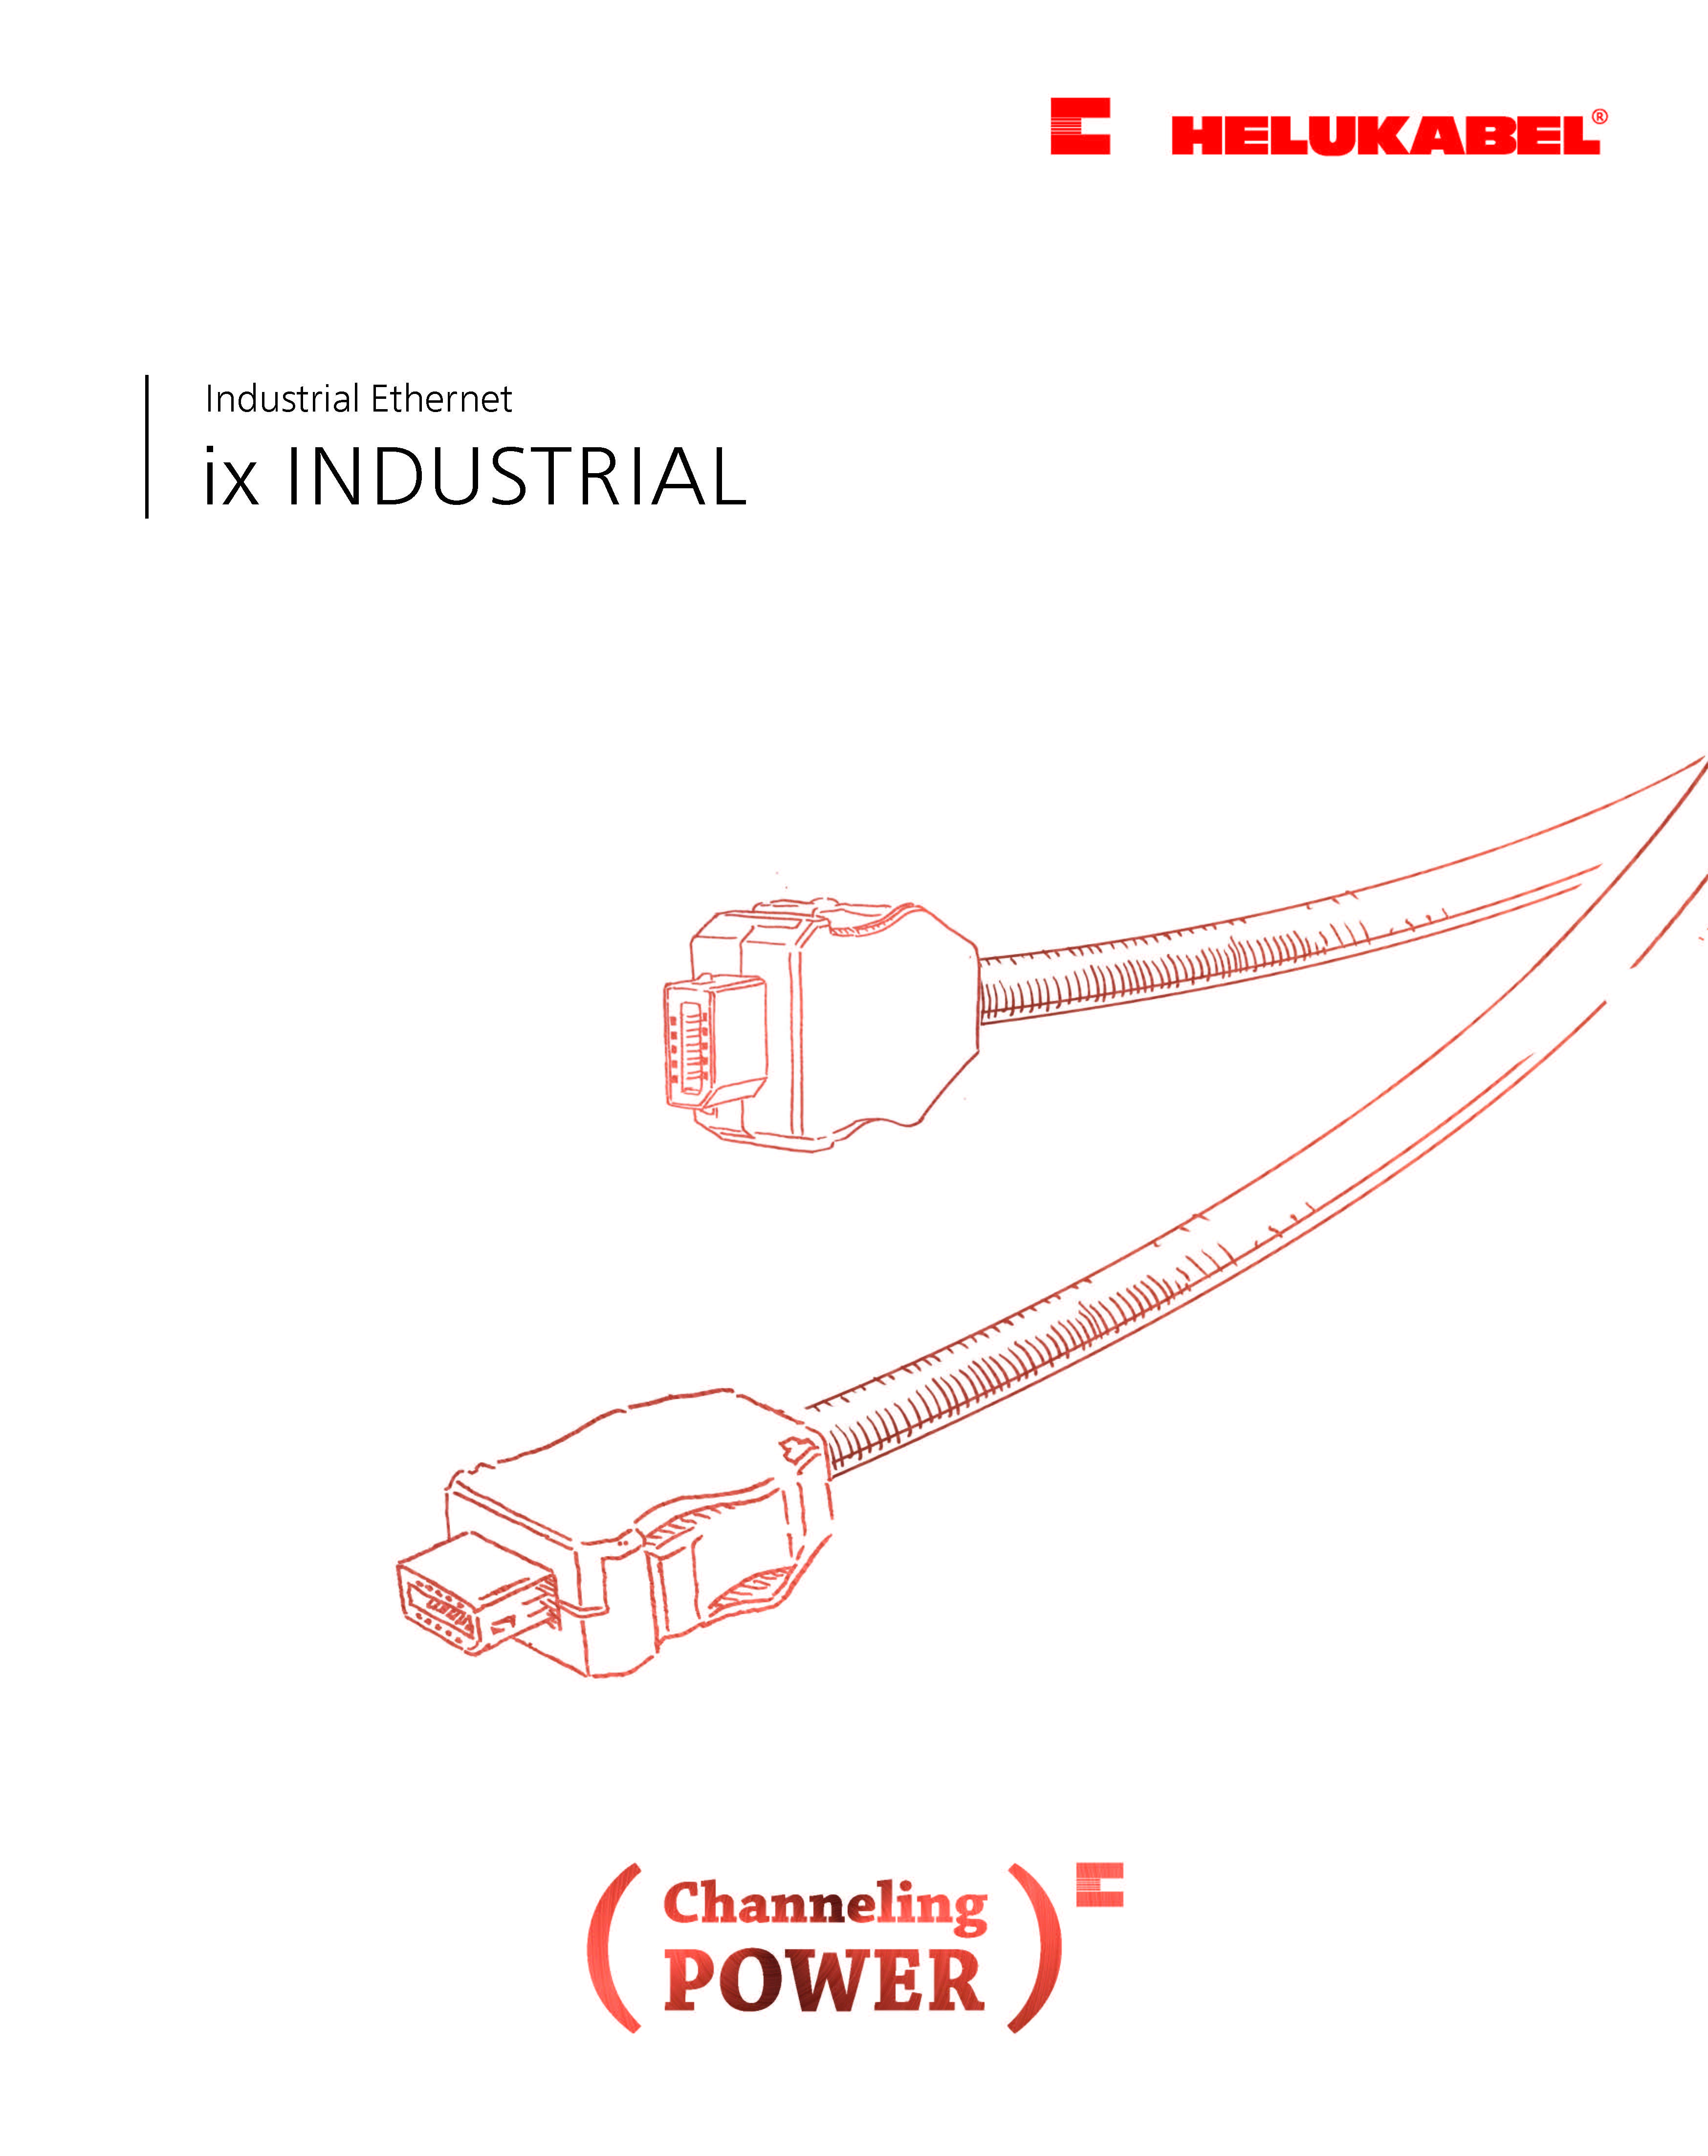 ix Industrial